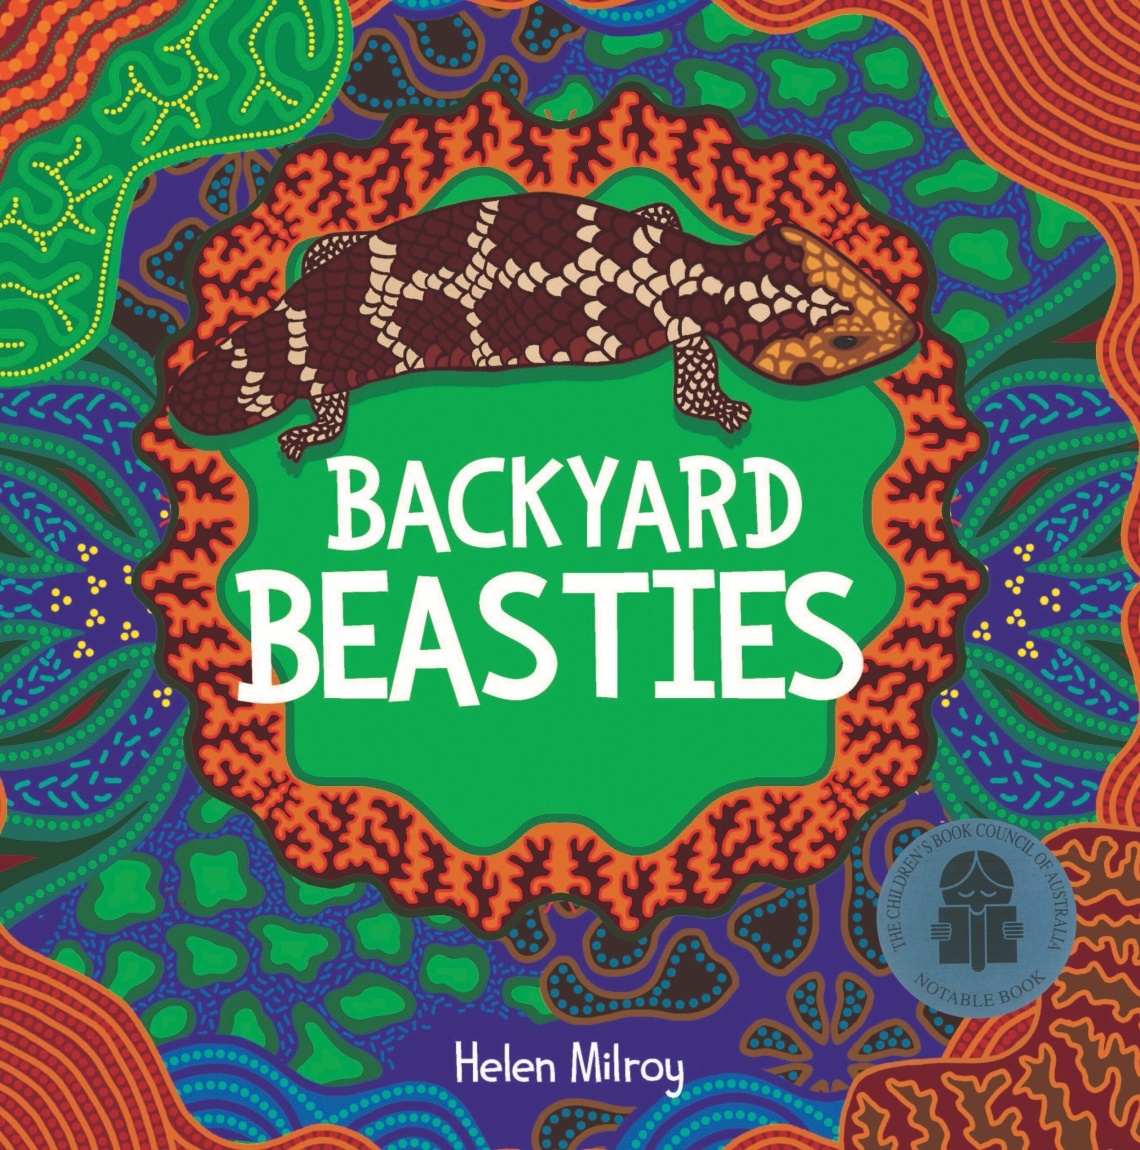 Book cover Backyard Beasties by Helen Milroy